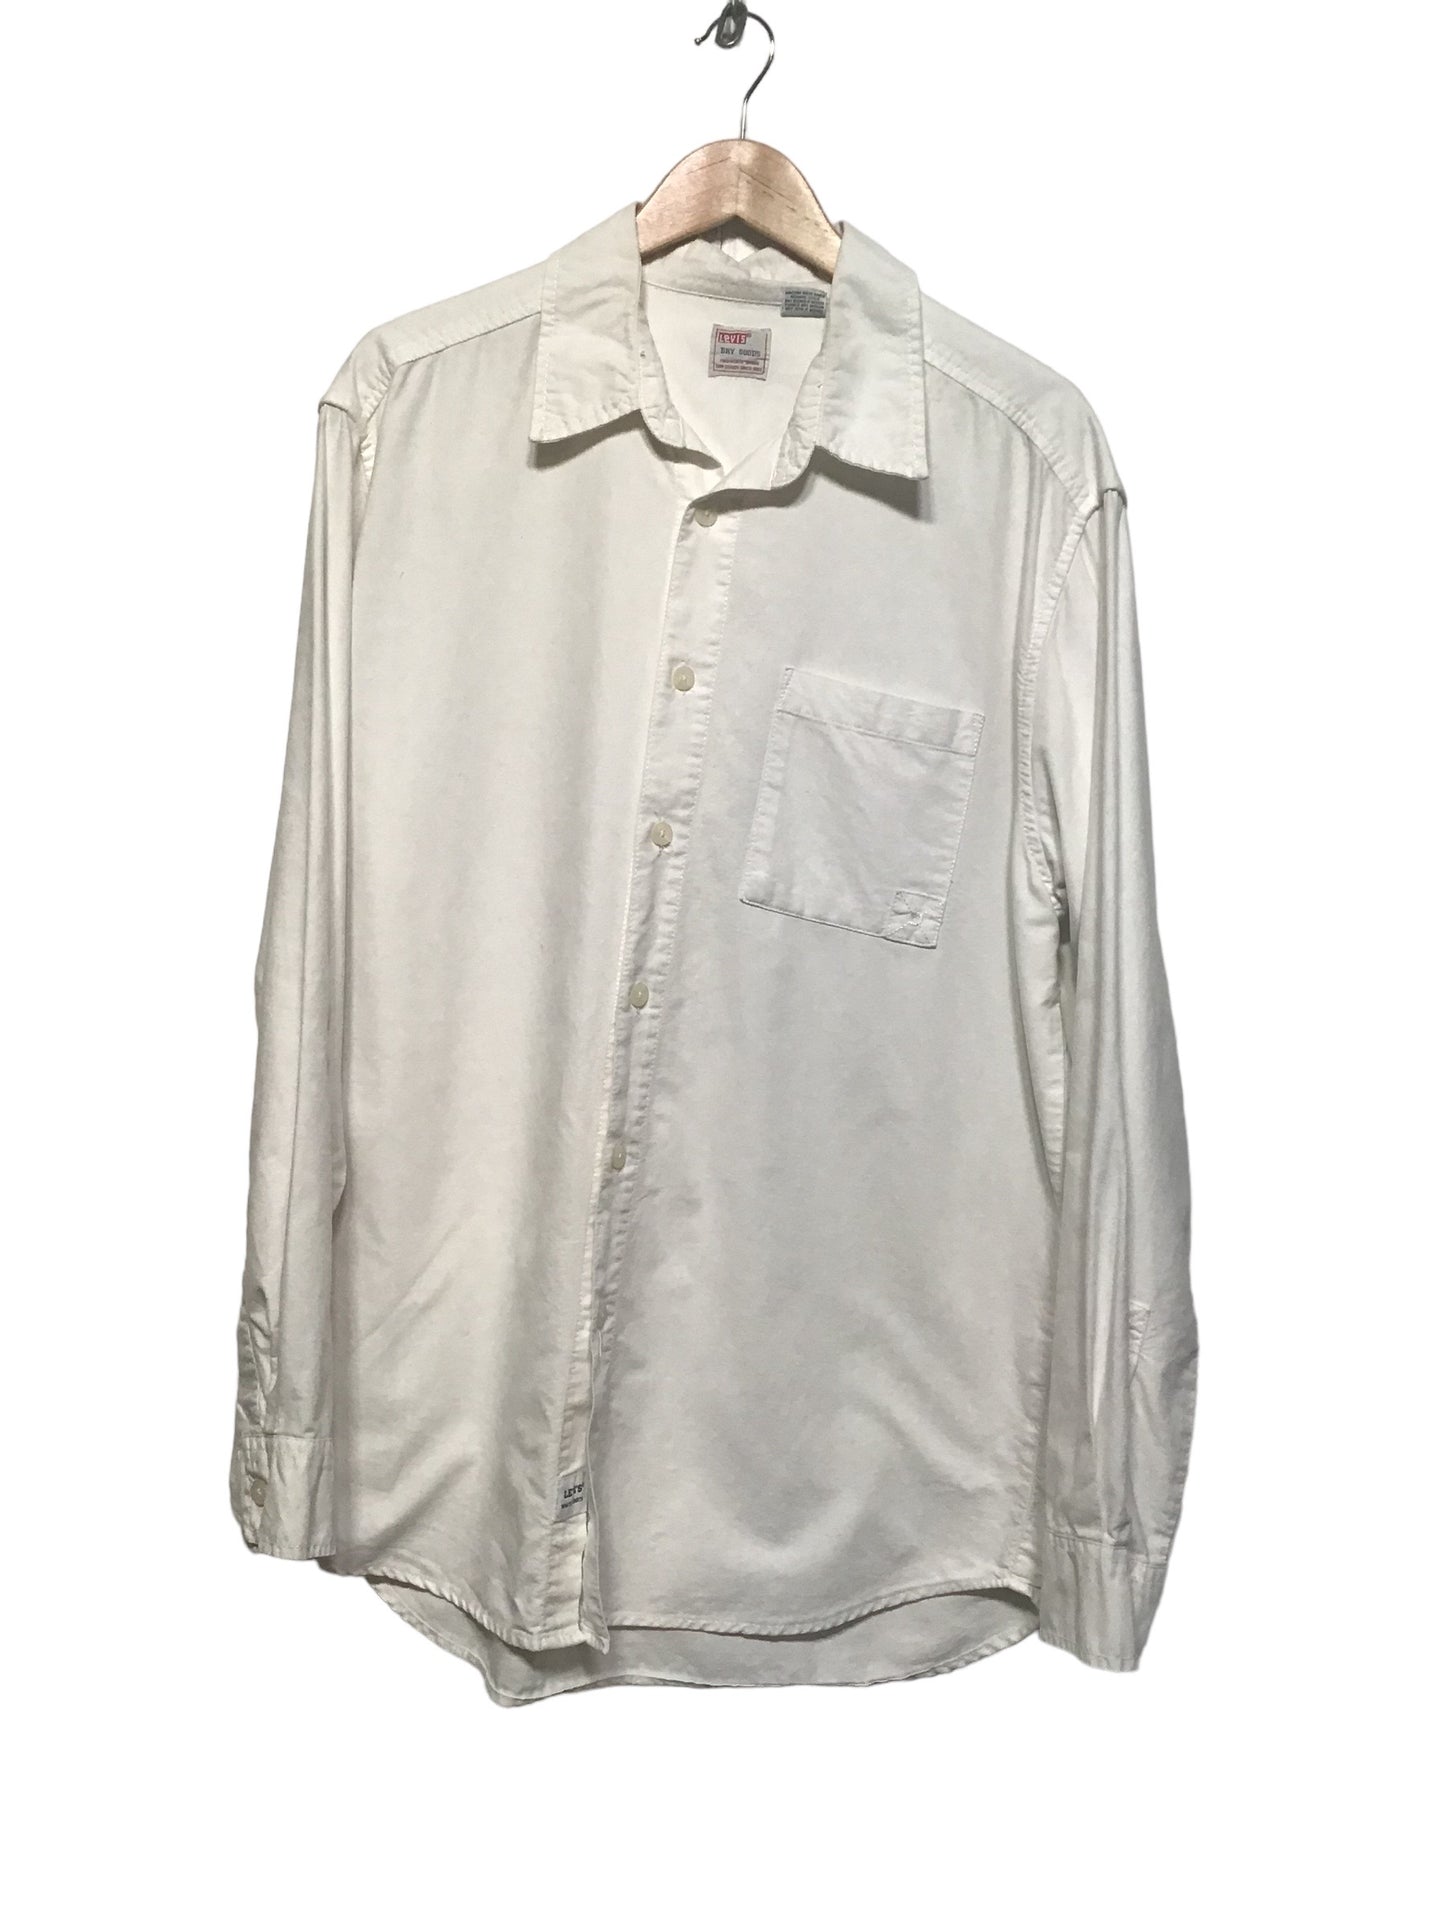 Levi's White Long Sleeve Shirt (Size L)